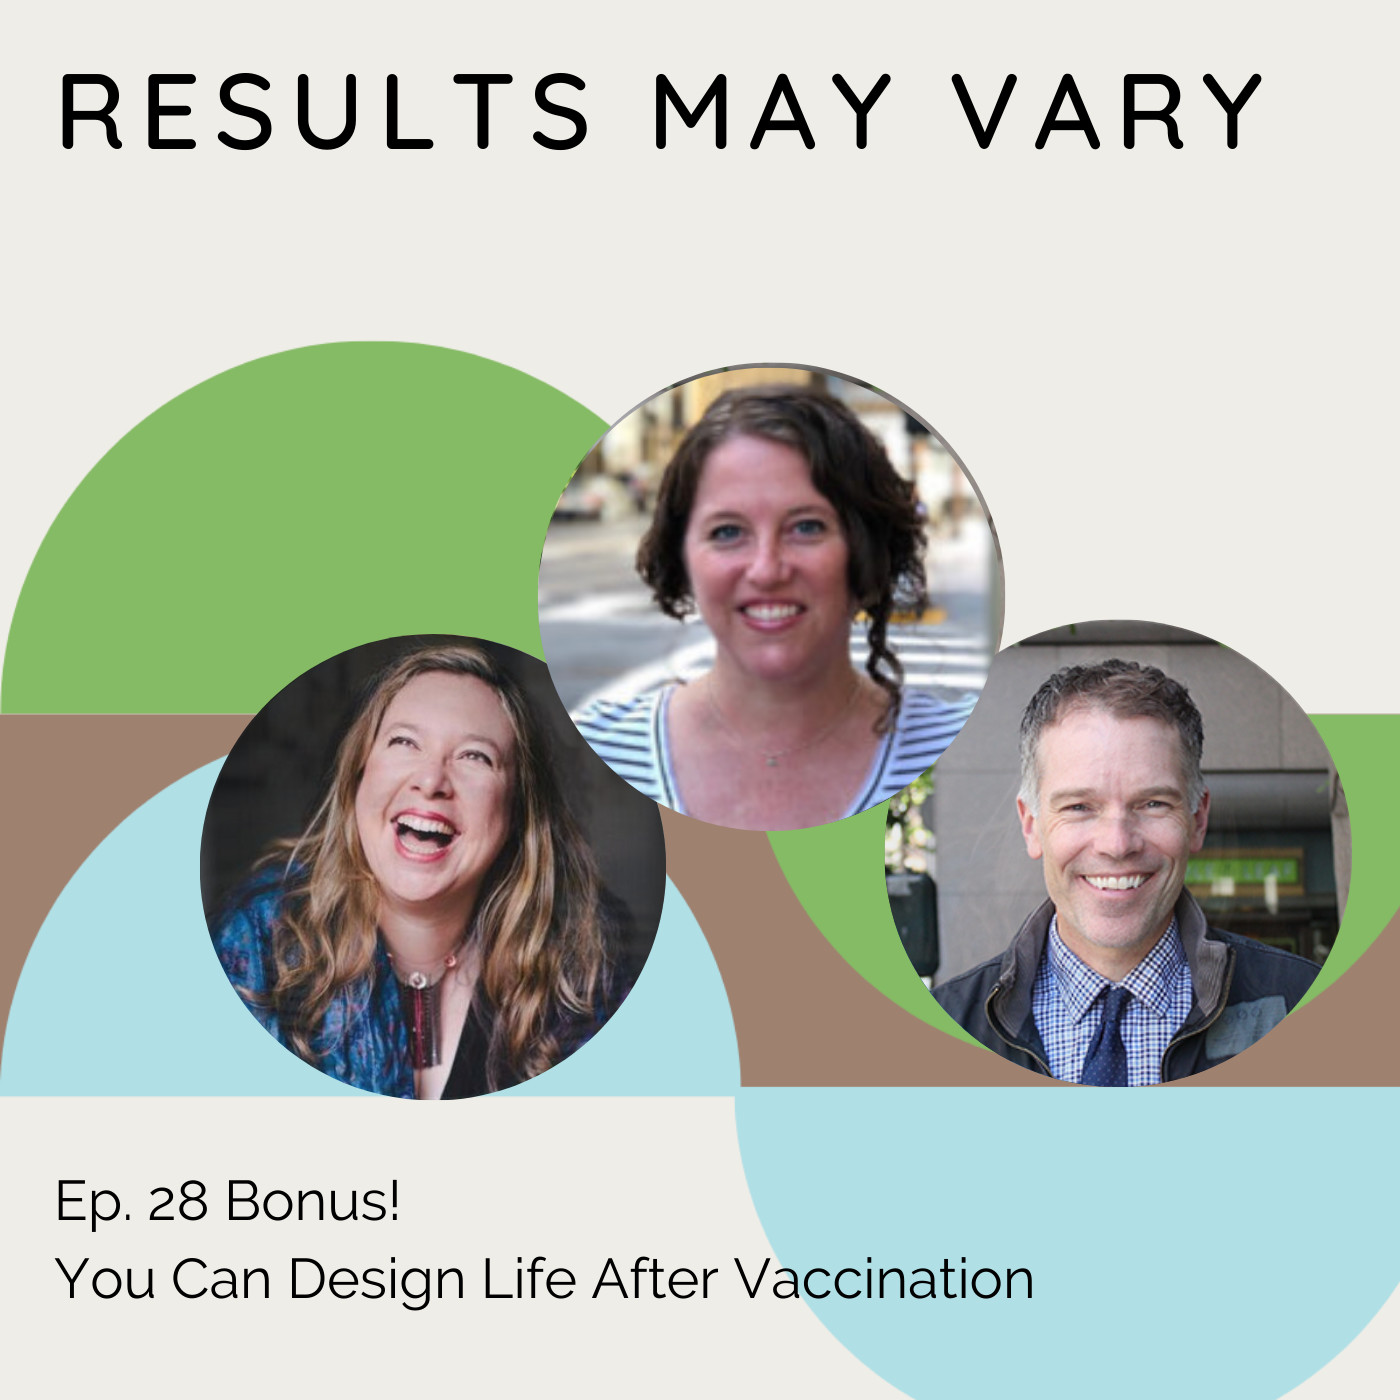 RMV 28 Bonus Episode! You Can Design Life After Vaccination